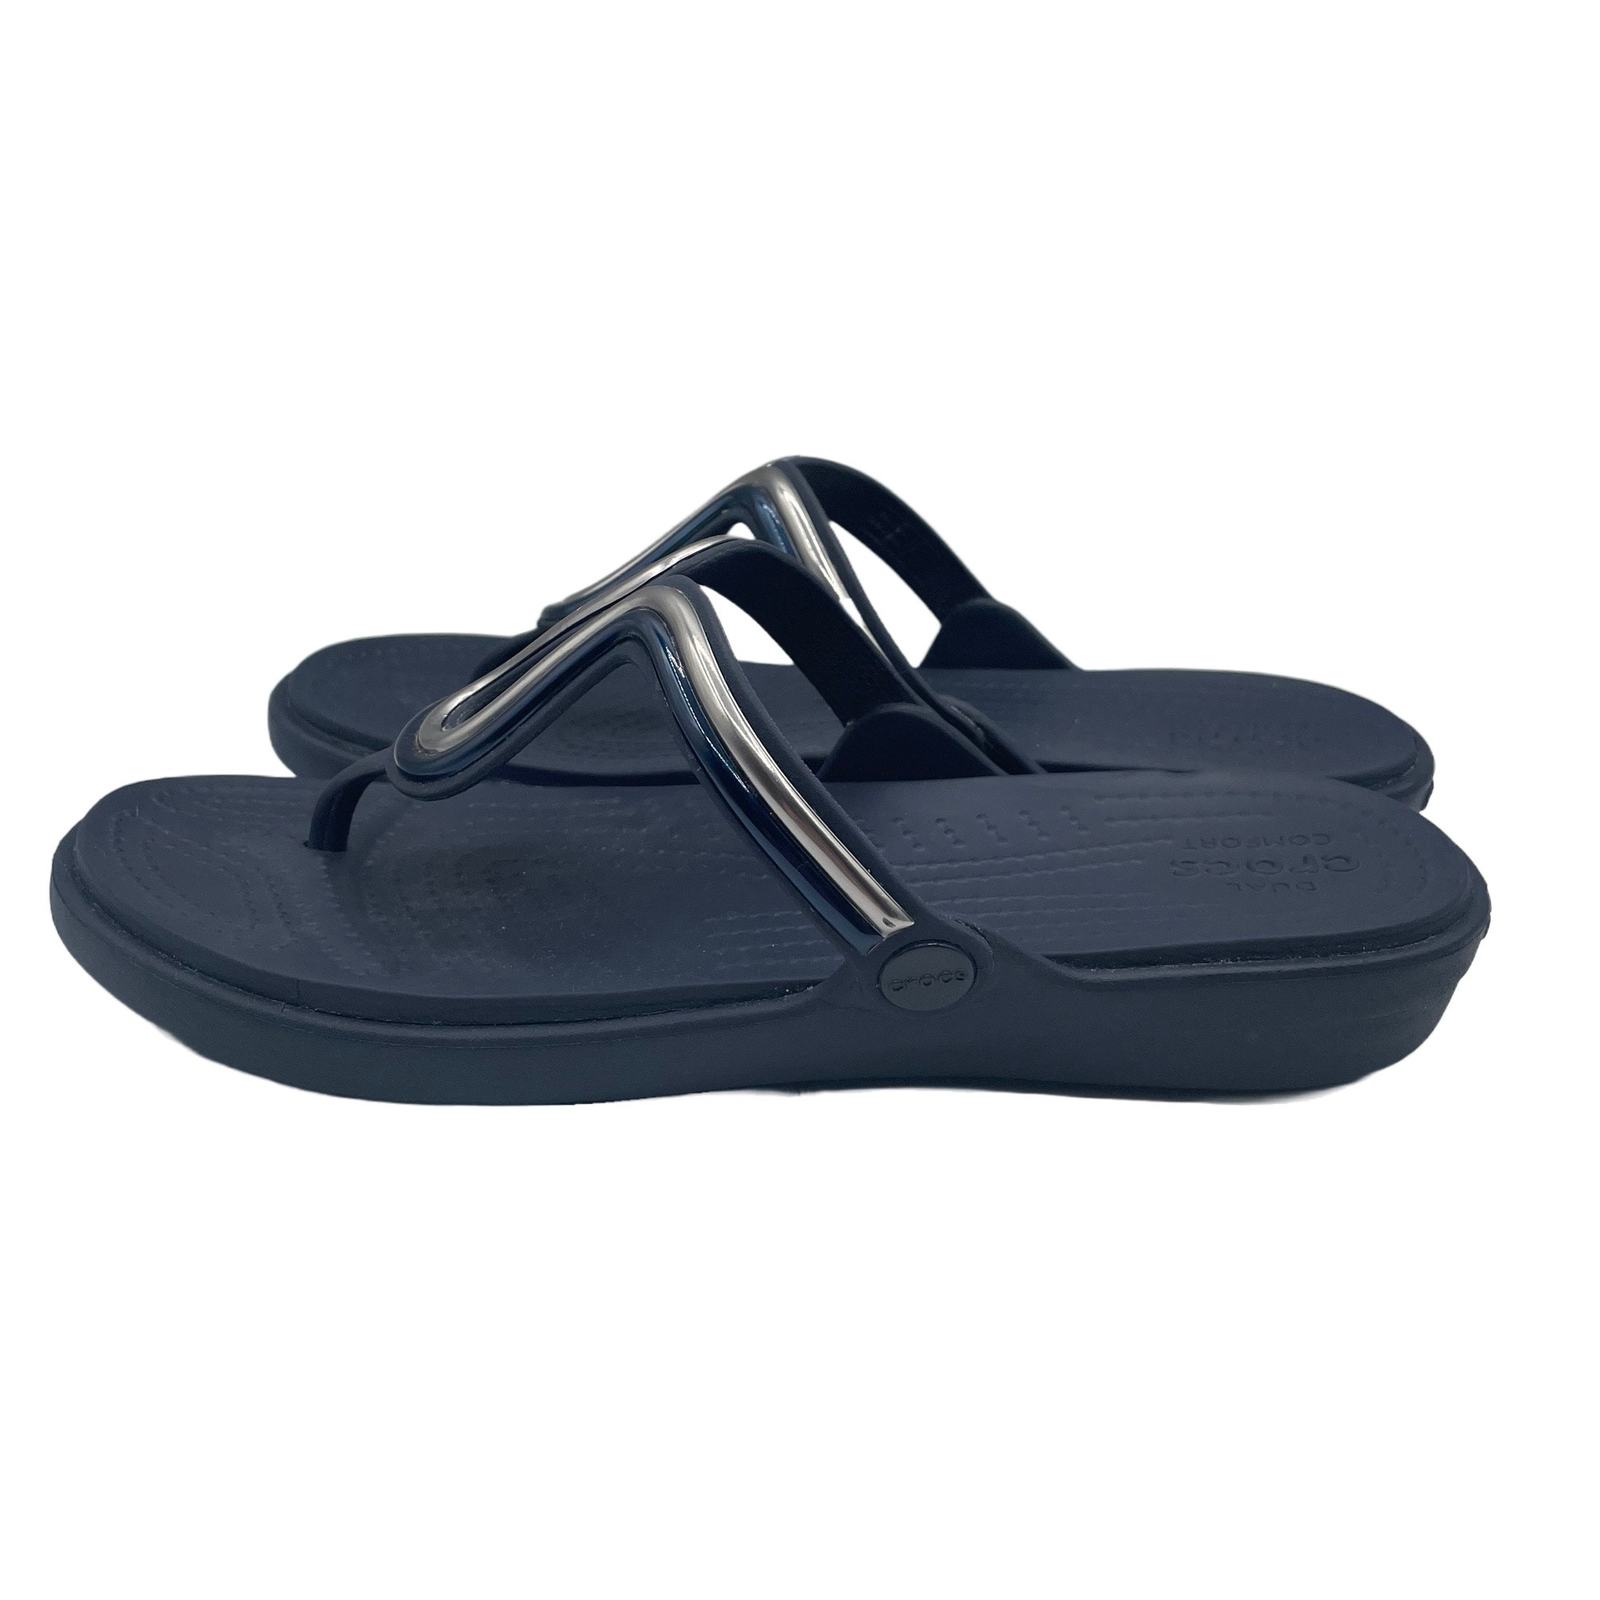 Primary image for Crocs Sanrah Metal Block Flat Flip Flop Sandals Navy Blue Silver Womens Size 9